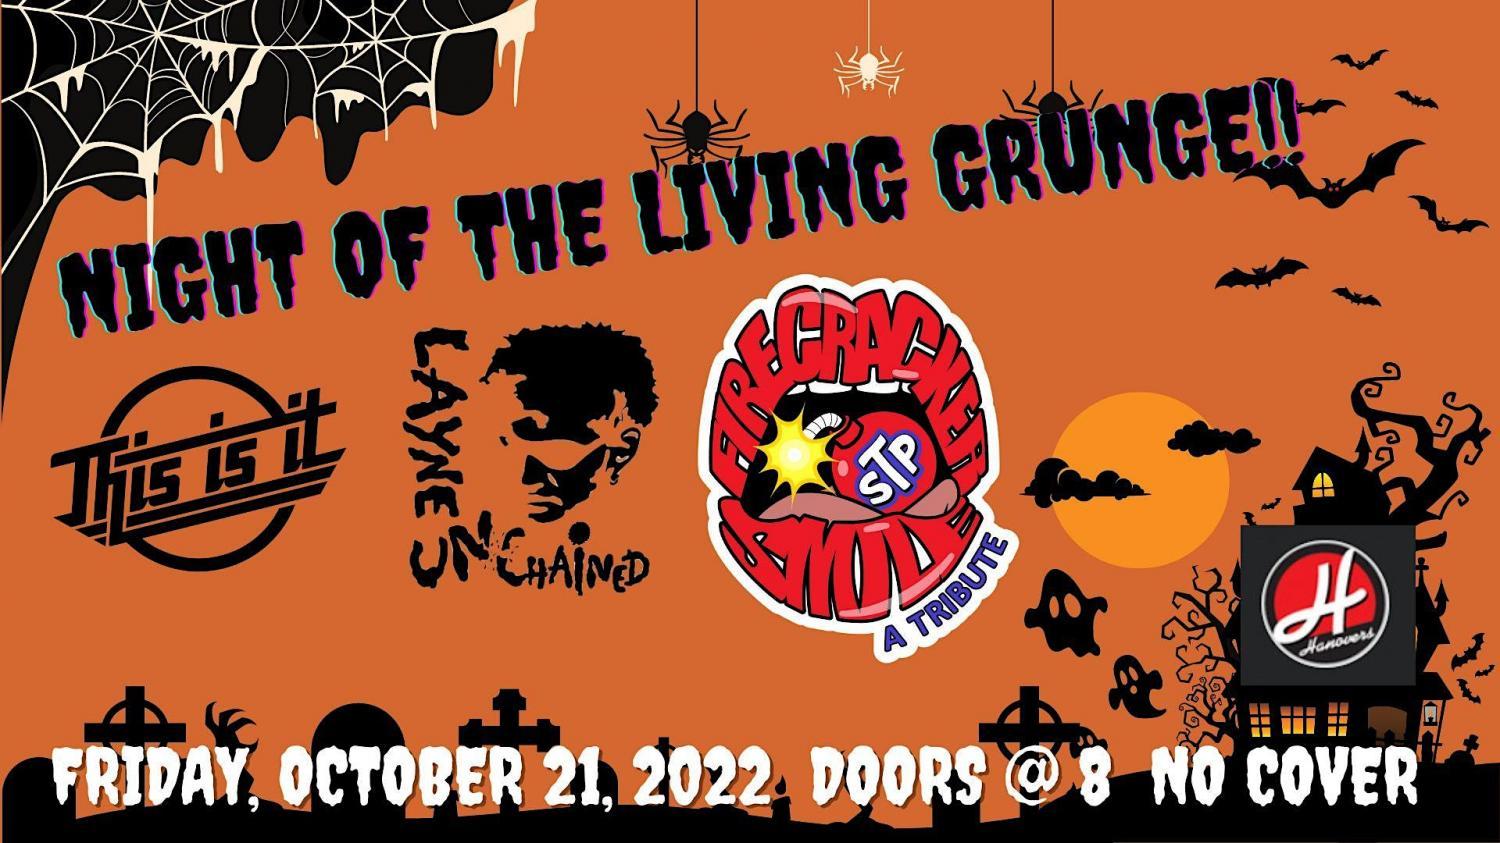 Night of the Living Grunge @ Hanovers Pflugerville
Fri Oct 21, 7:00 PM - Sat Oct 22, 1:00 AM